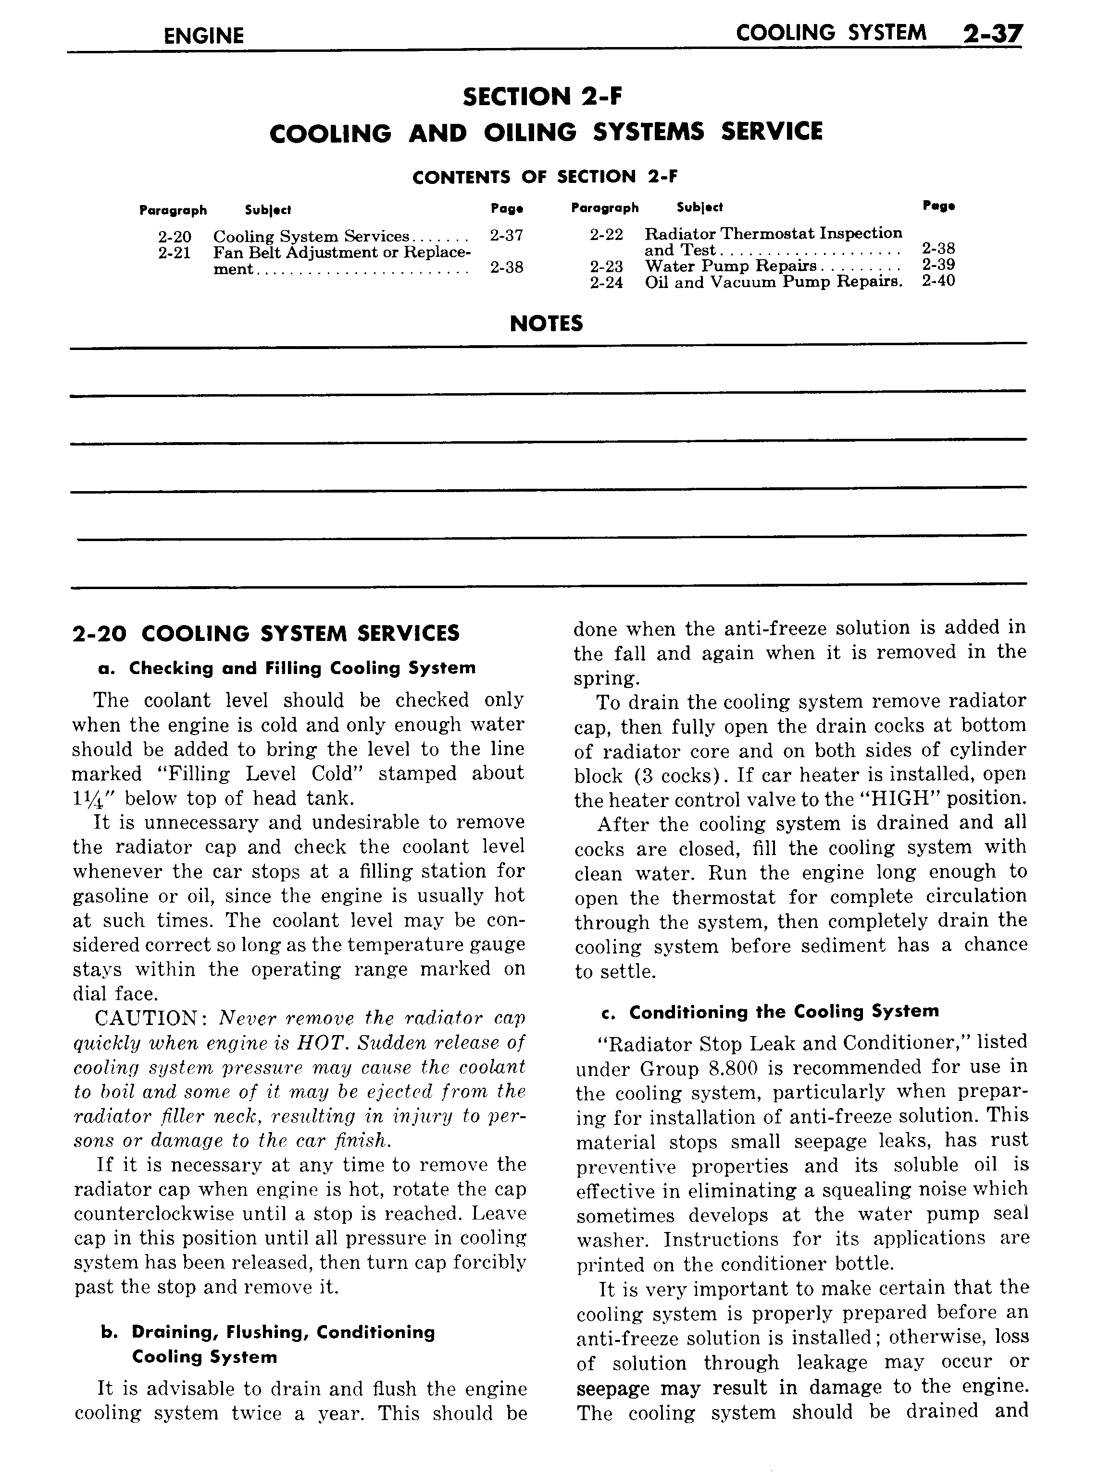 n_03 1957 Buick Shop Manual - Engine-037-037.jpg